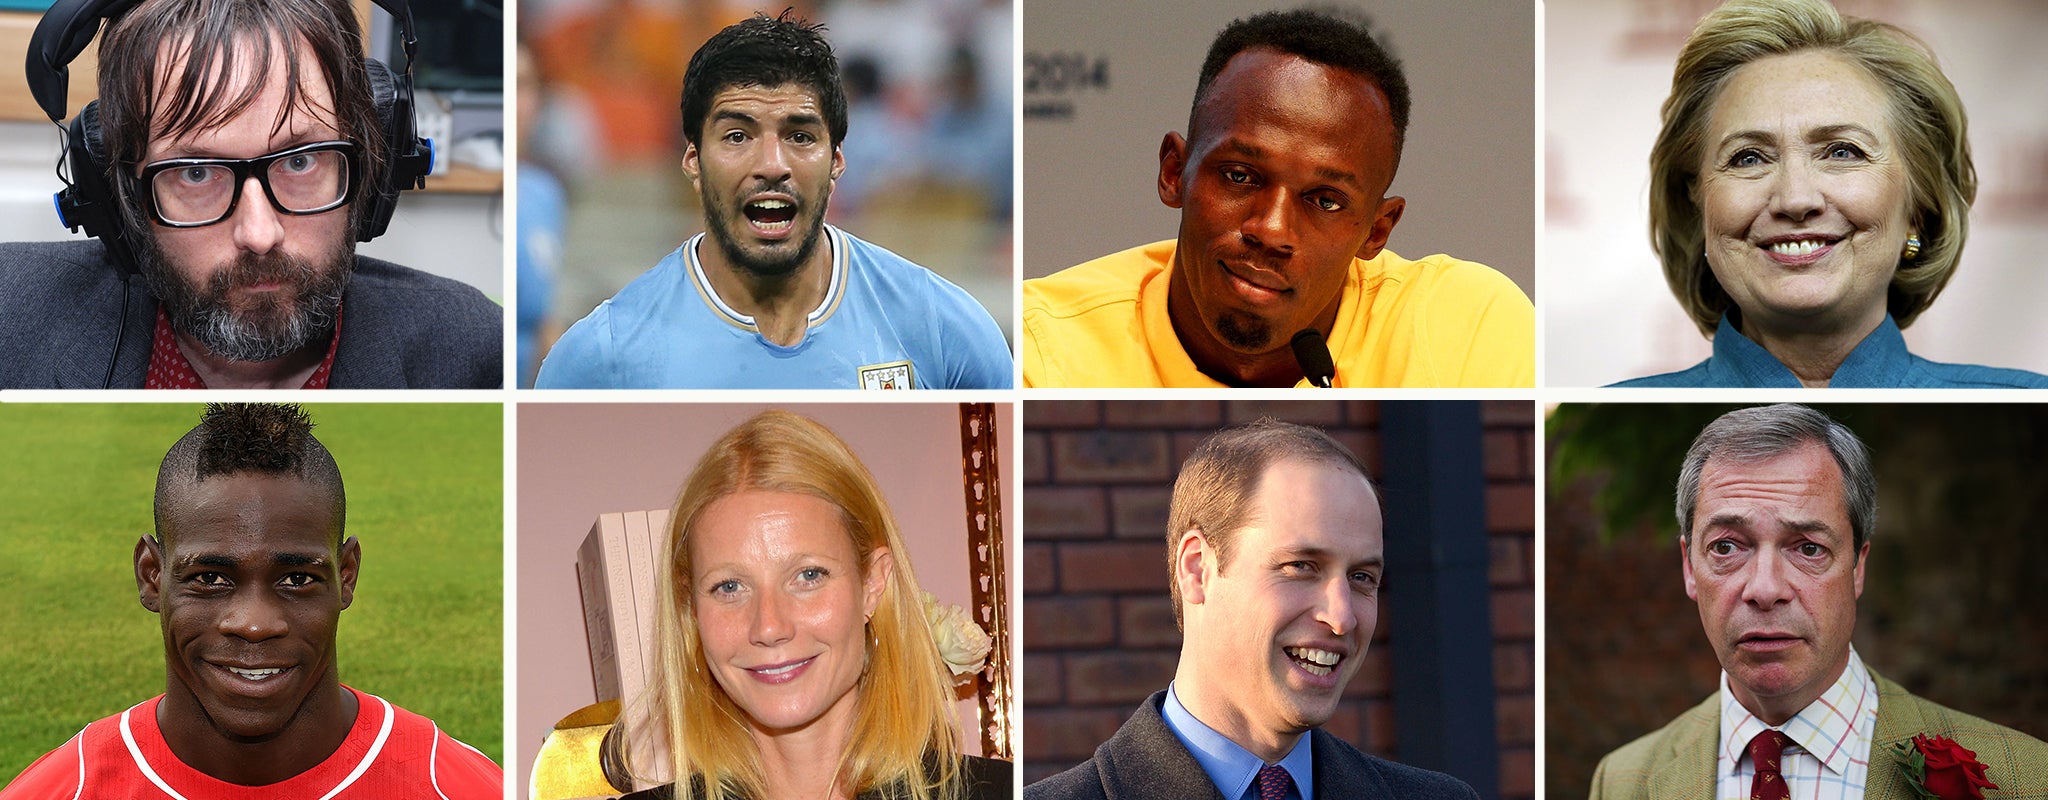 Clockwise from top left: Jarvis Cocker, Luis Suarez, Usain Bolt, Hilary Clinton, Nigel Farage, Prince William, Gwyneth Paltrow, Mario Balotelli